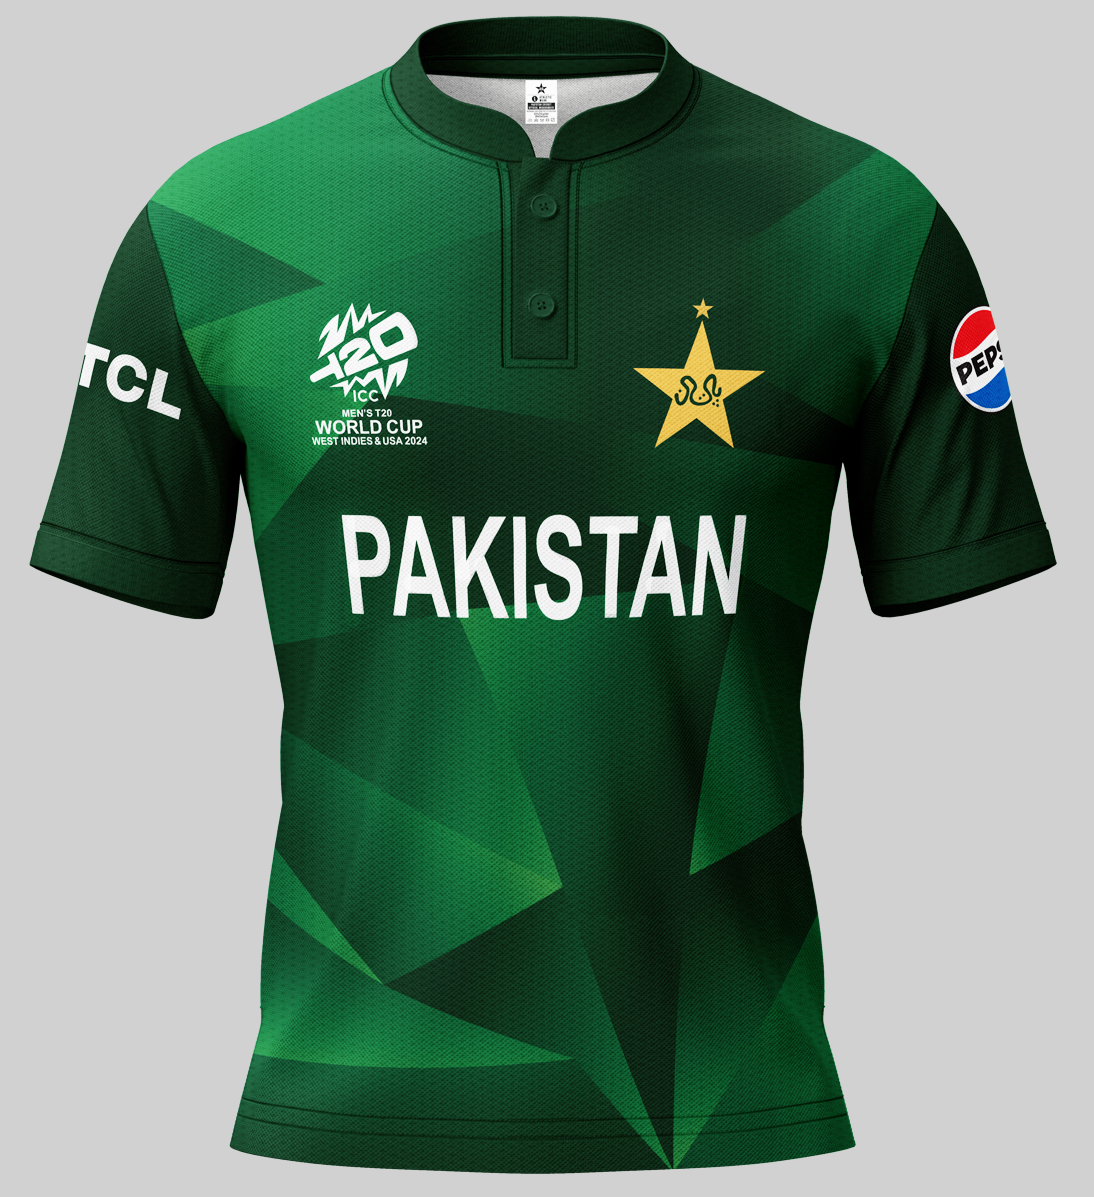 Pakistan Matrix Jersey T20 World Cup 2024 - (Original)